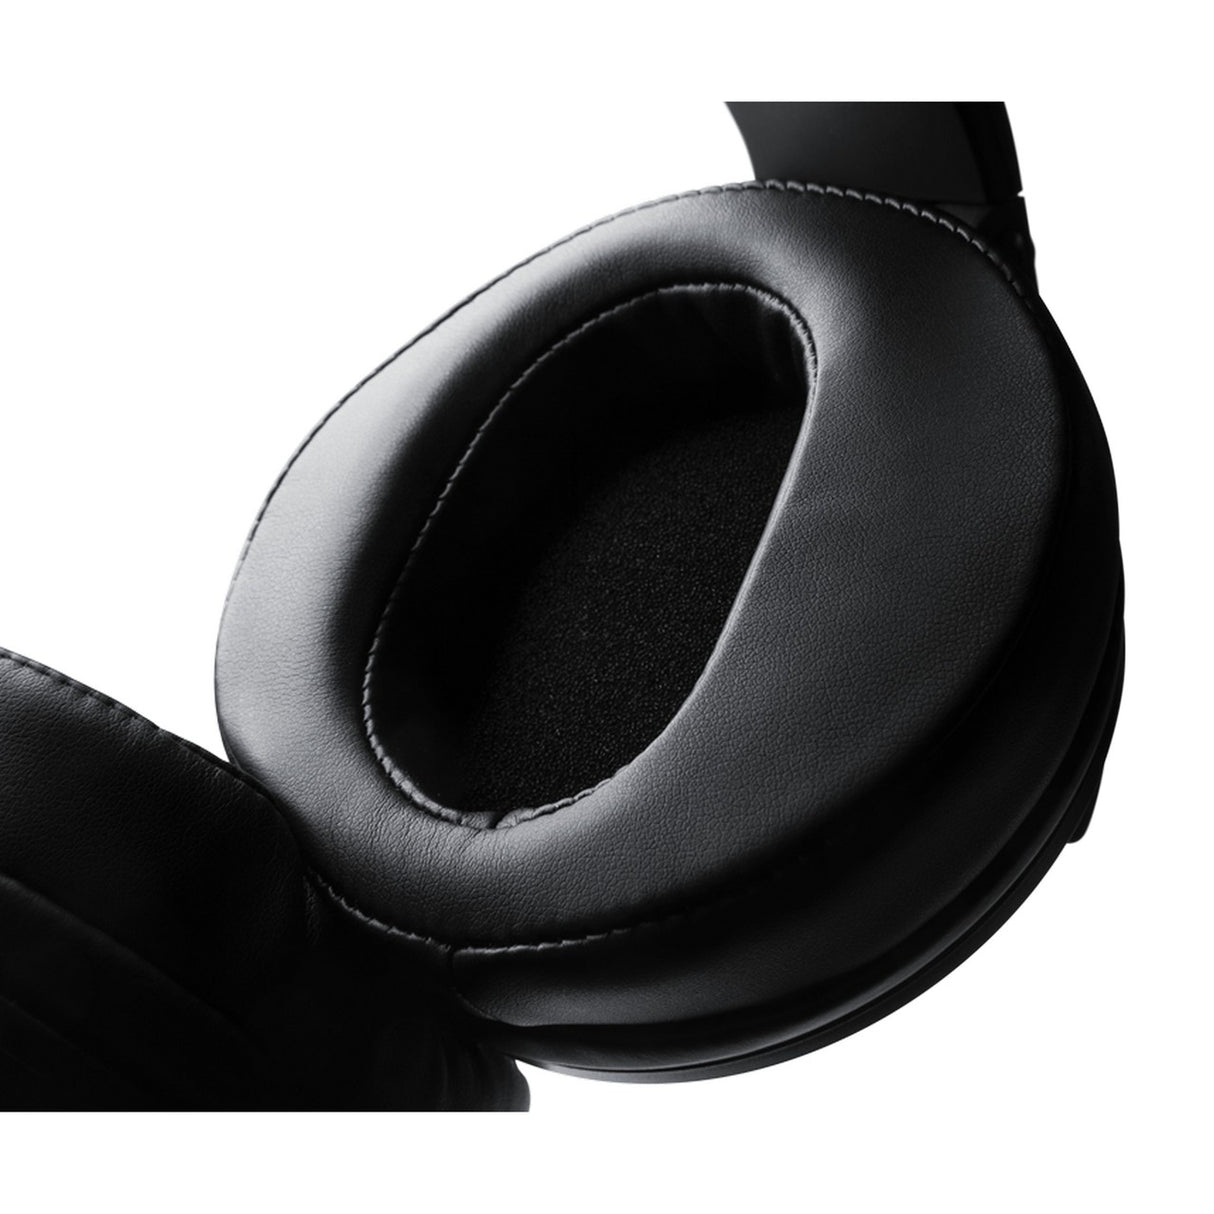 Mackie MC-250 | Professional Closed-Back Headphone